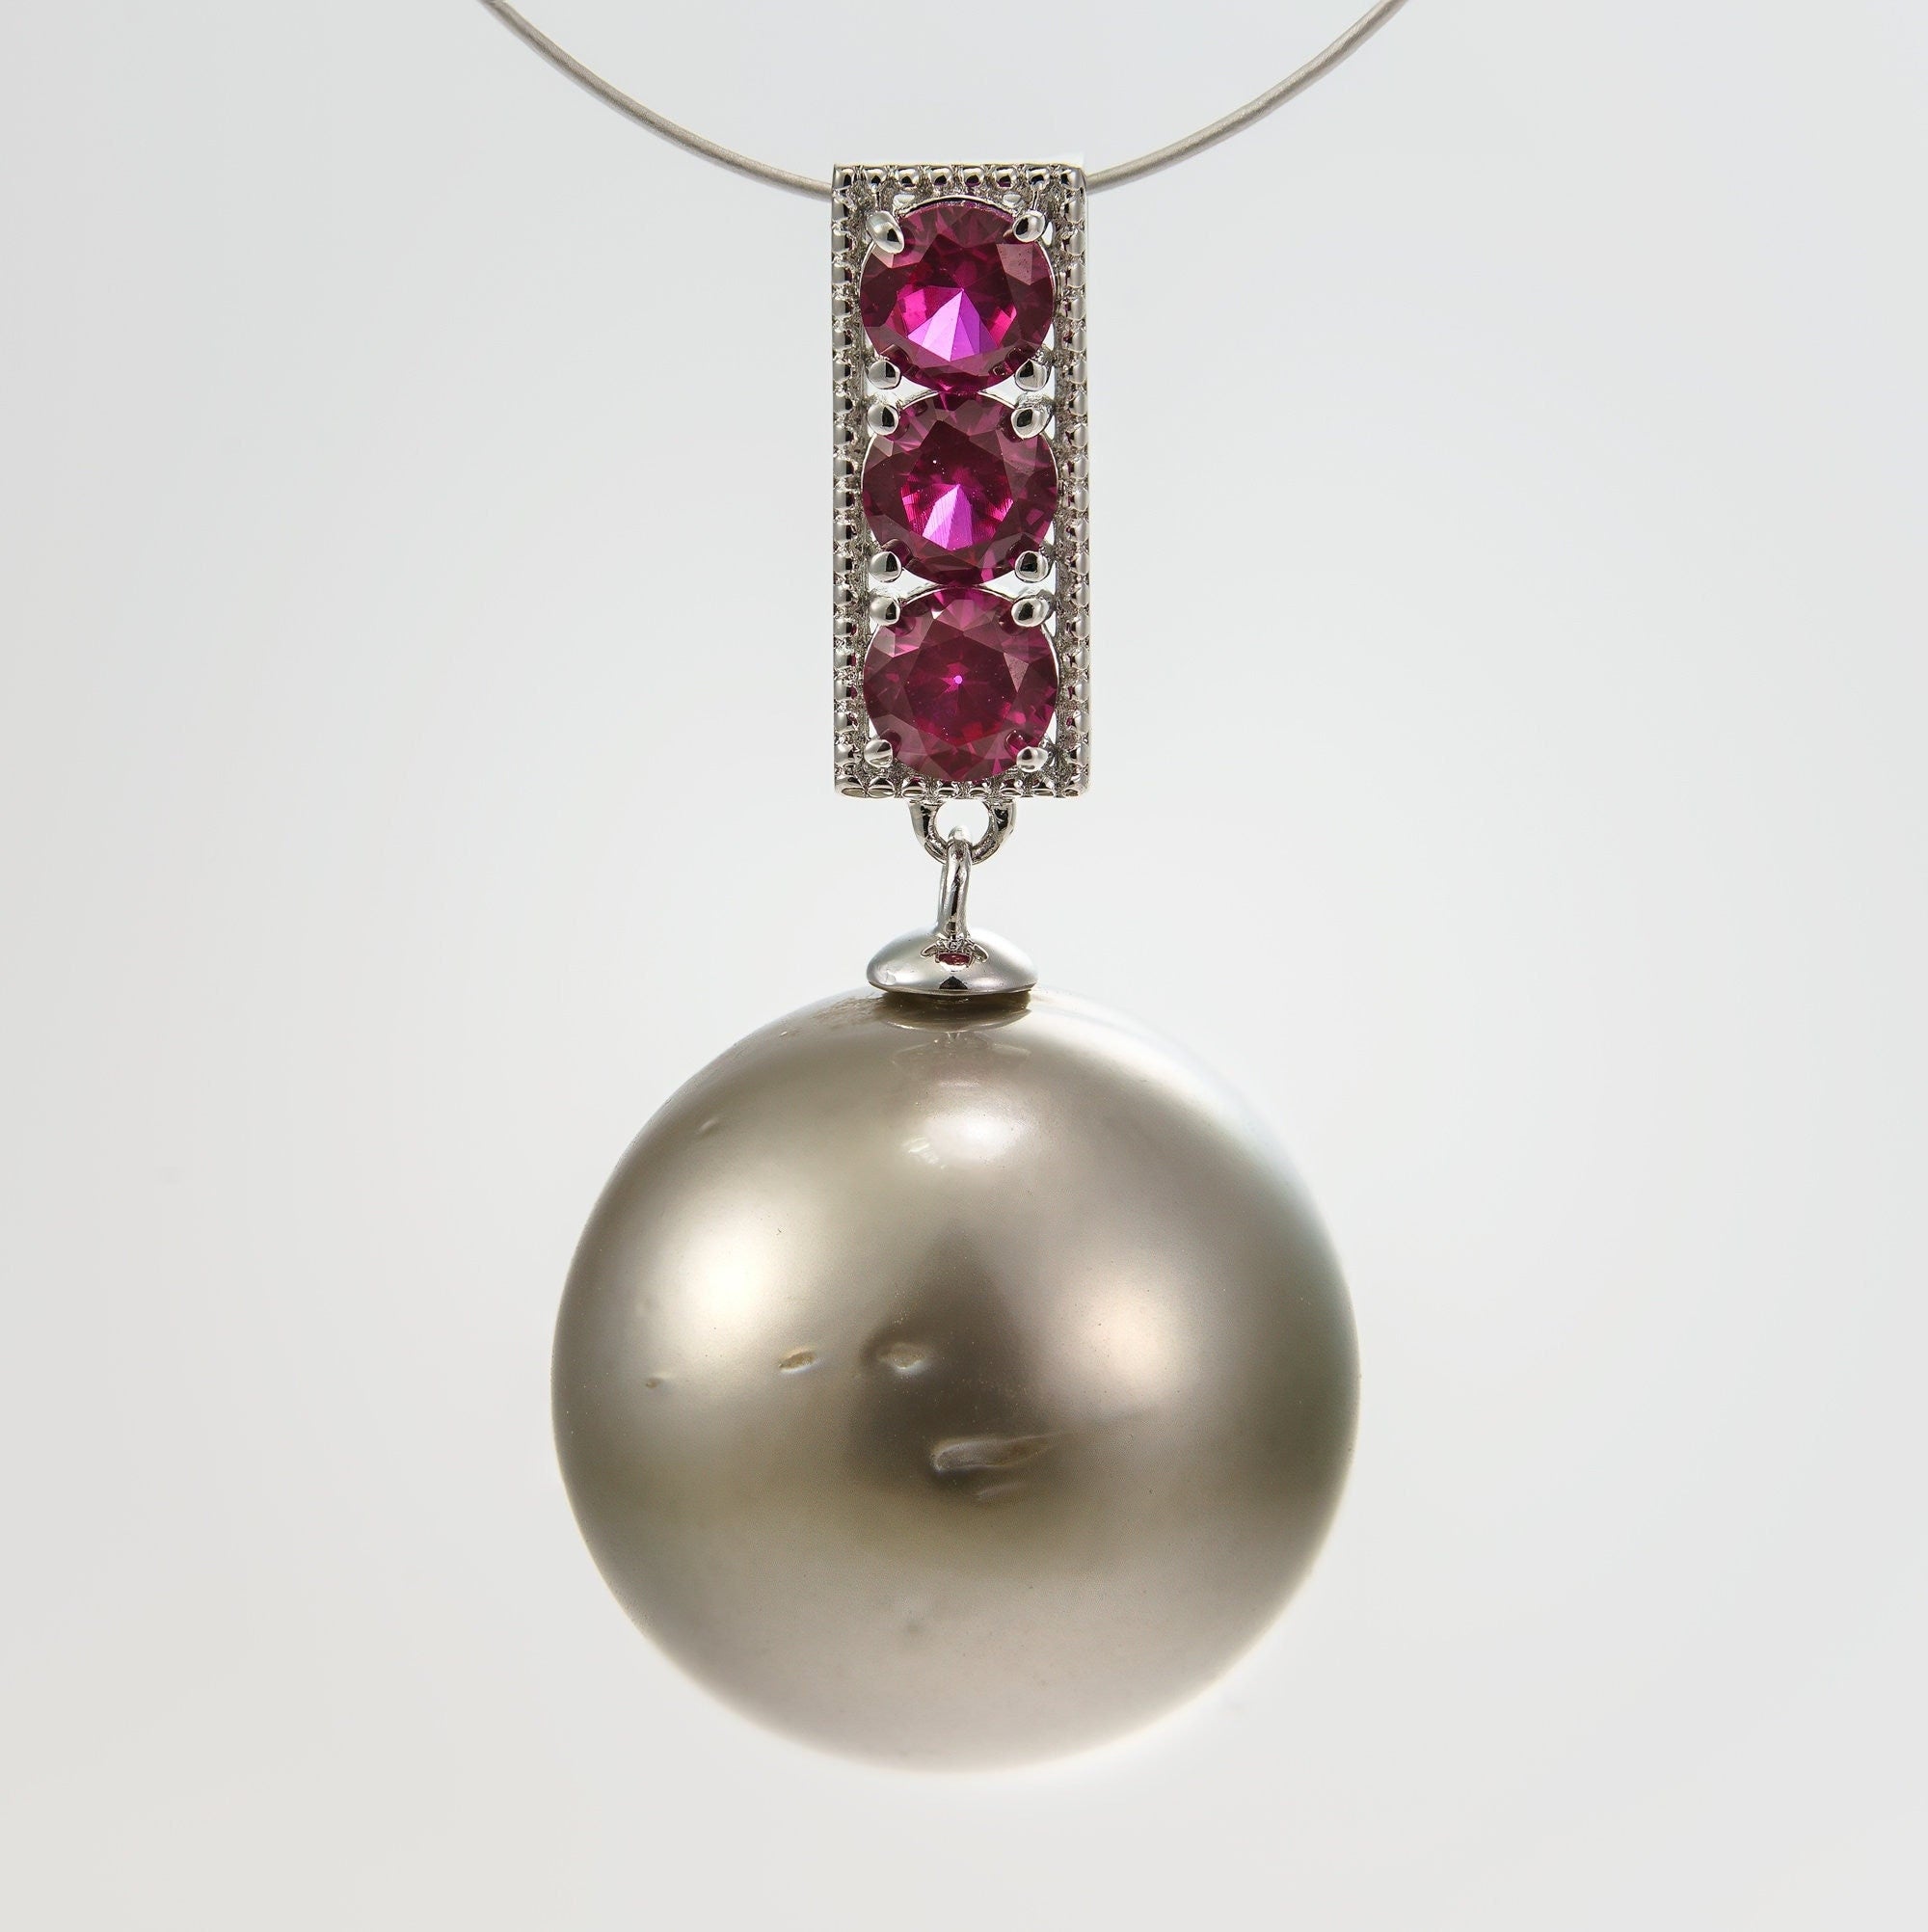 15mm tahitian pearl pendant, 925 sterling silver, rhodium finish, cubic zirconia